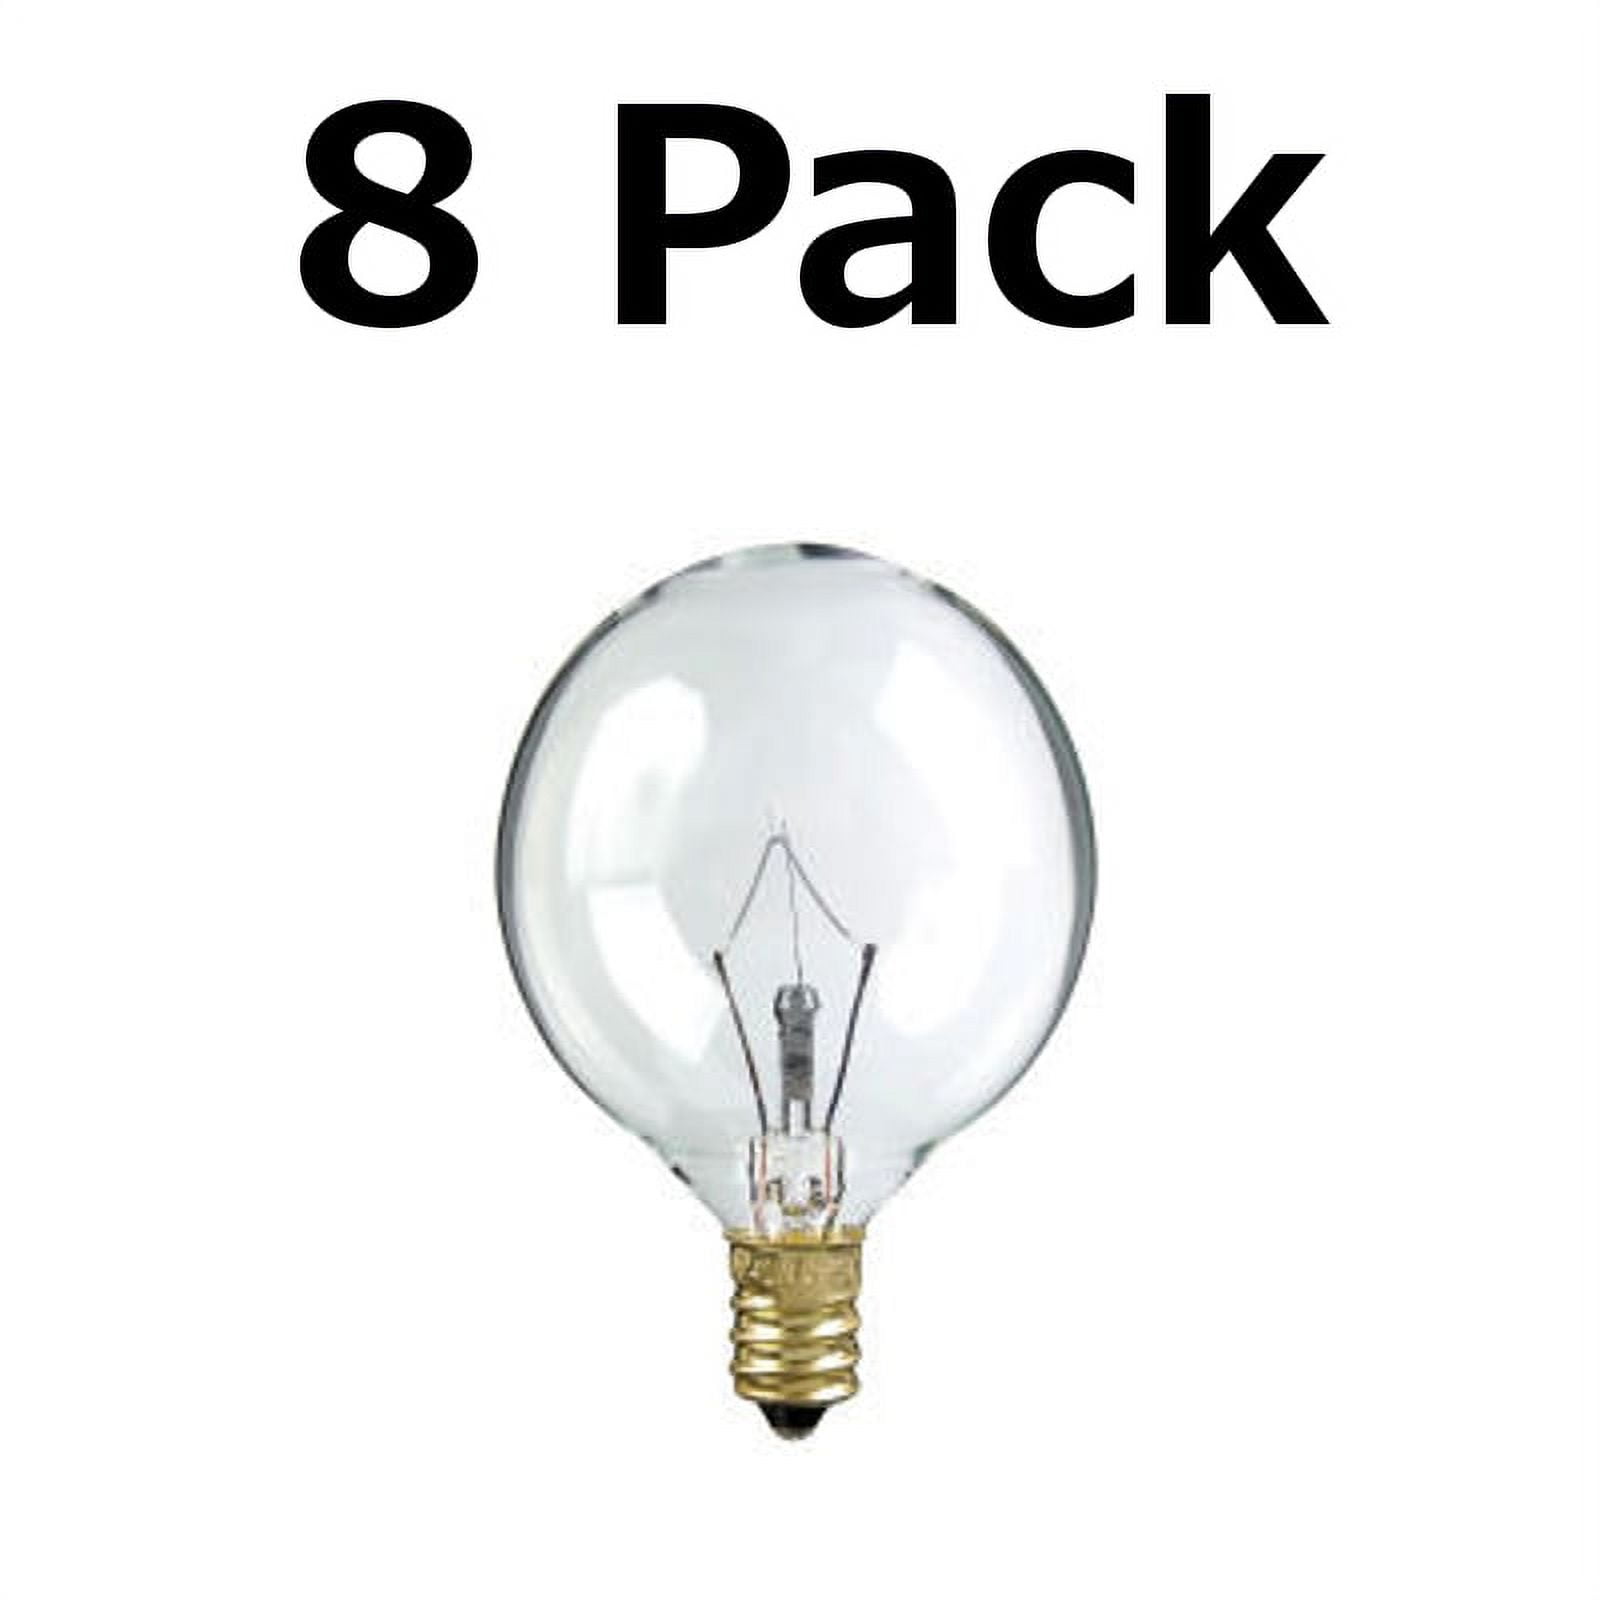 25 Watt Scentsy Bulbs,Wax Warmer Bulbs for Full Size Scentsy Warmers,120  Volt/E12 Base Incandescent Clear Light Bulbs for Candle Wax Warmer,6 Packs